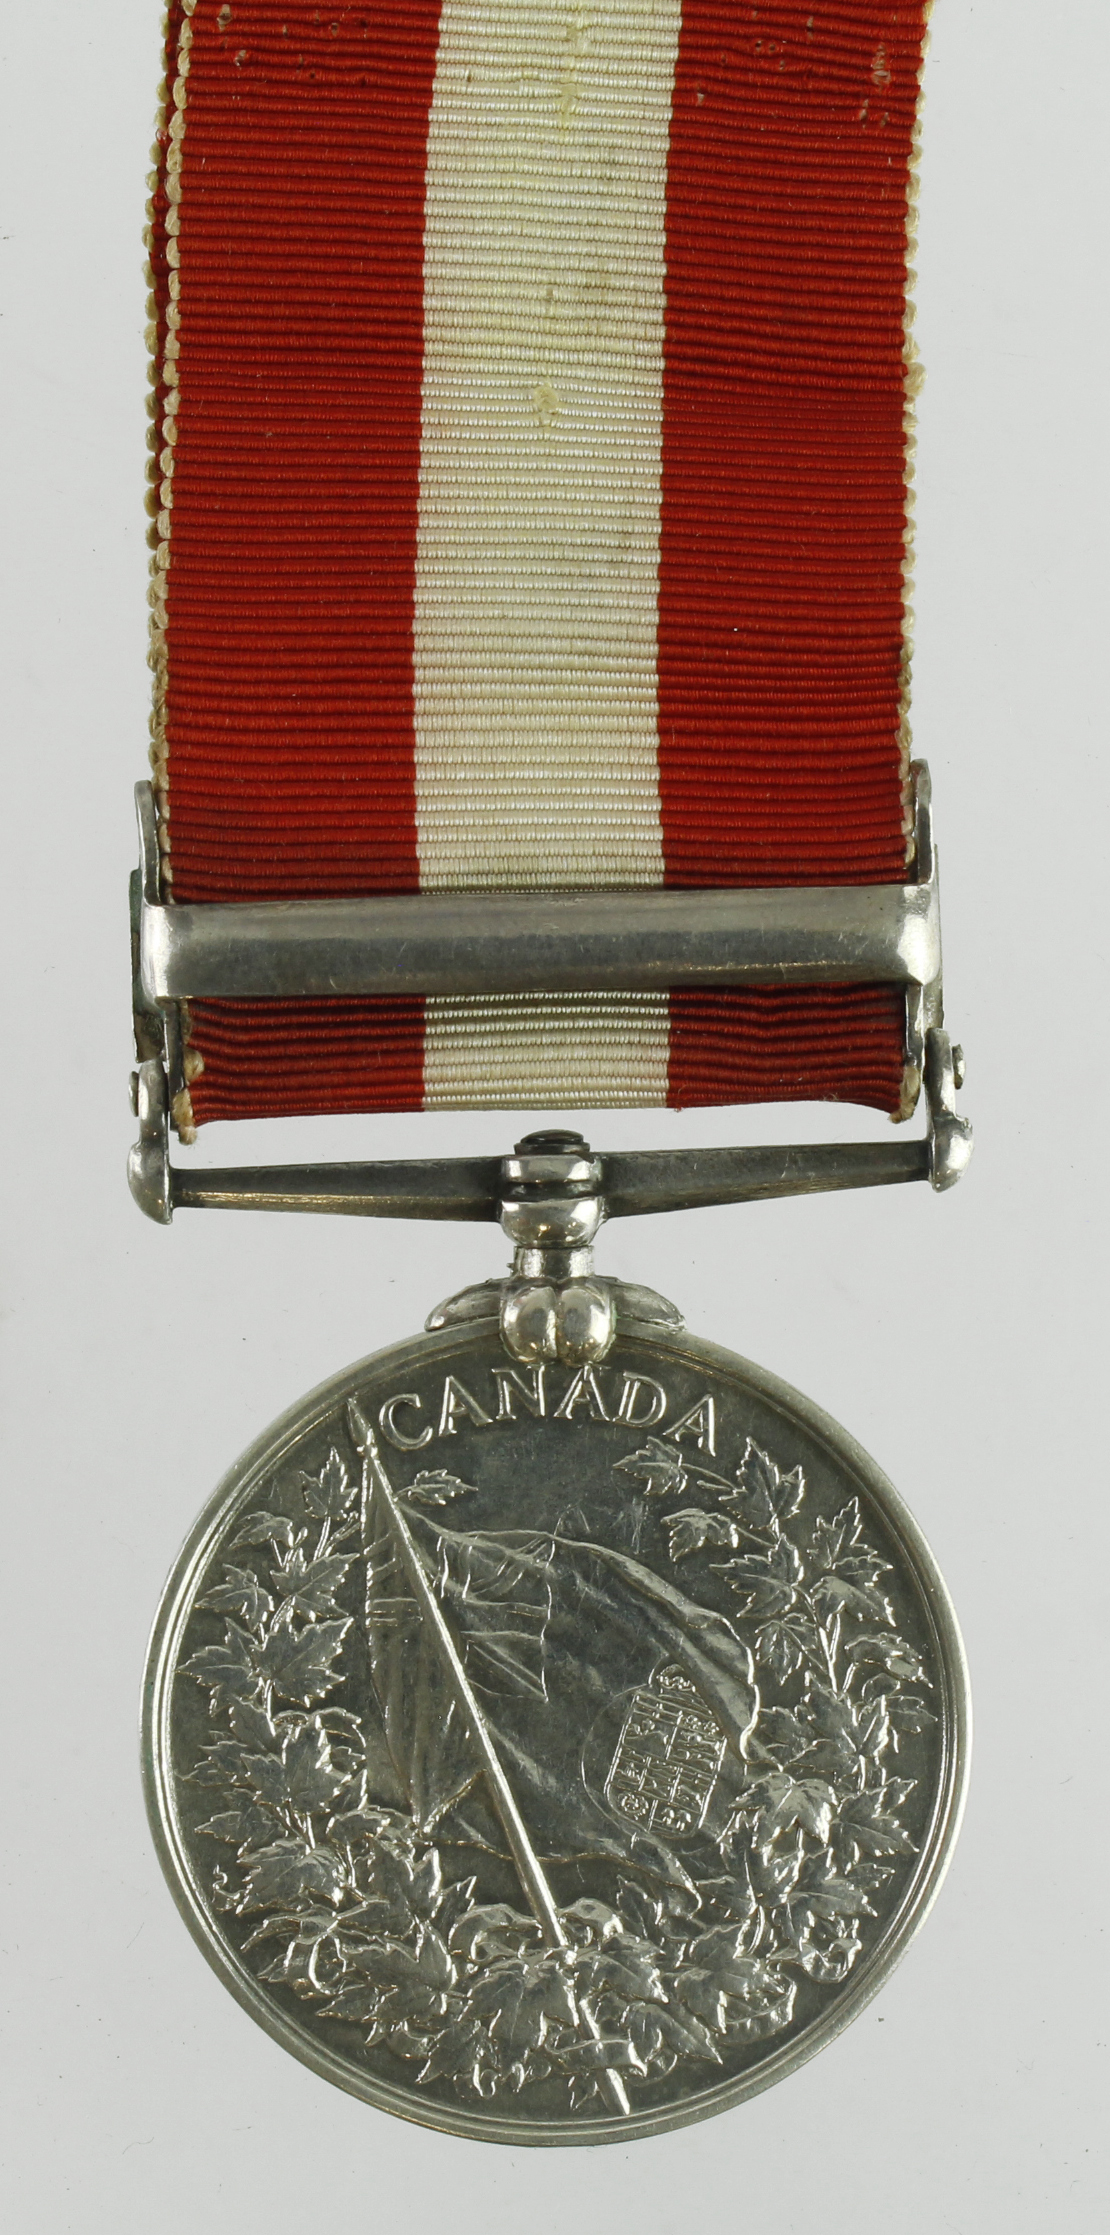 Canada General Service Medal 1899 with Fenian Riad 1870 clasp (Corpl R. St Denis 65th Battalion). - Bild 2 aus 2